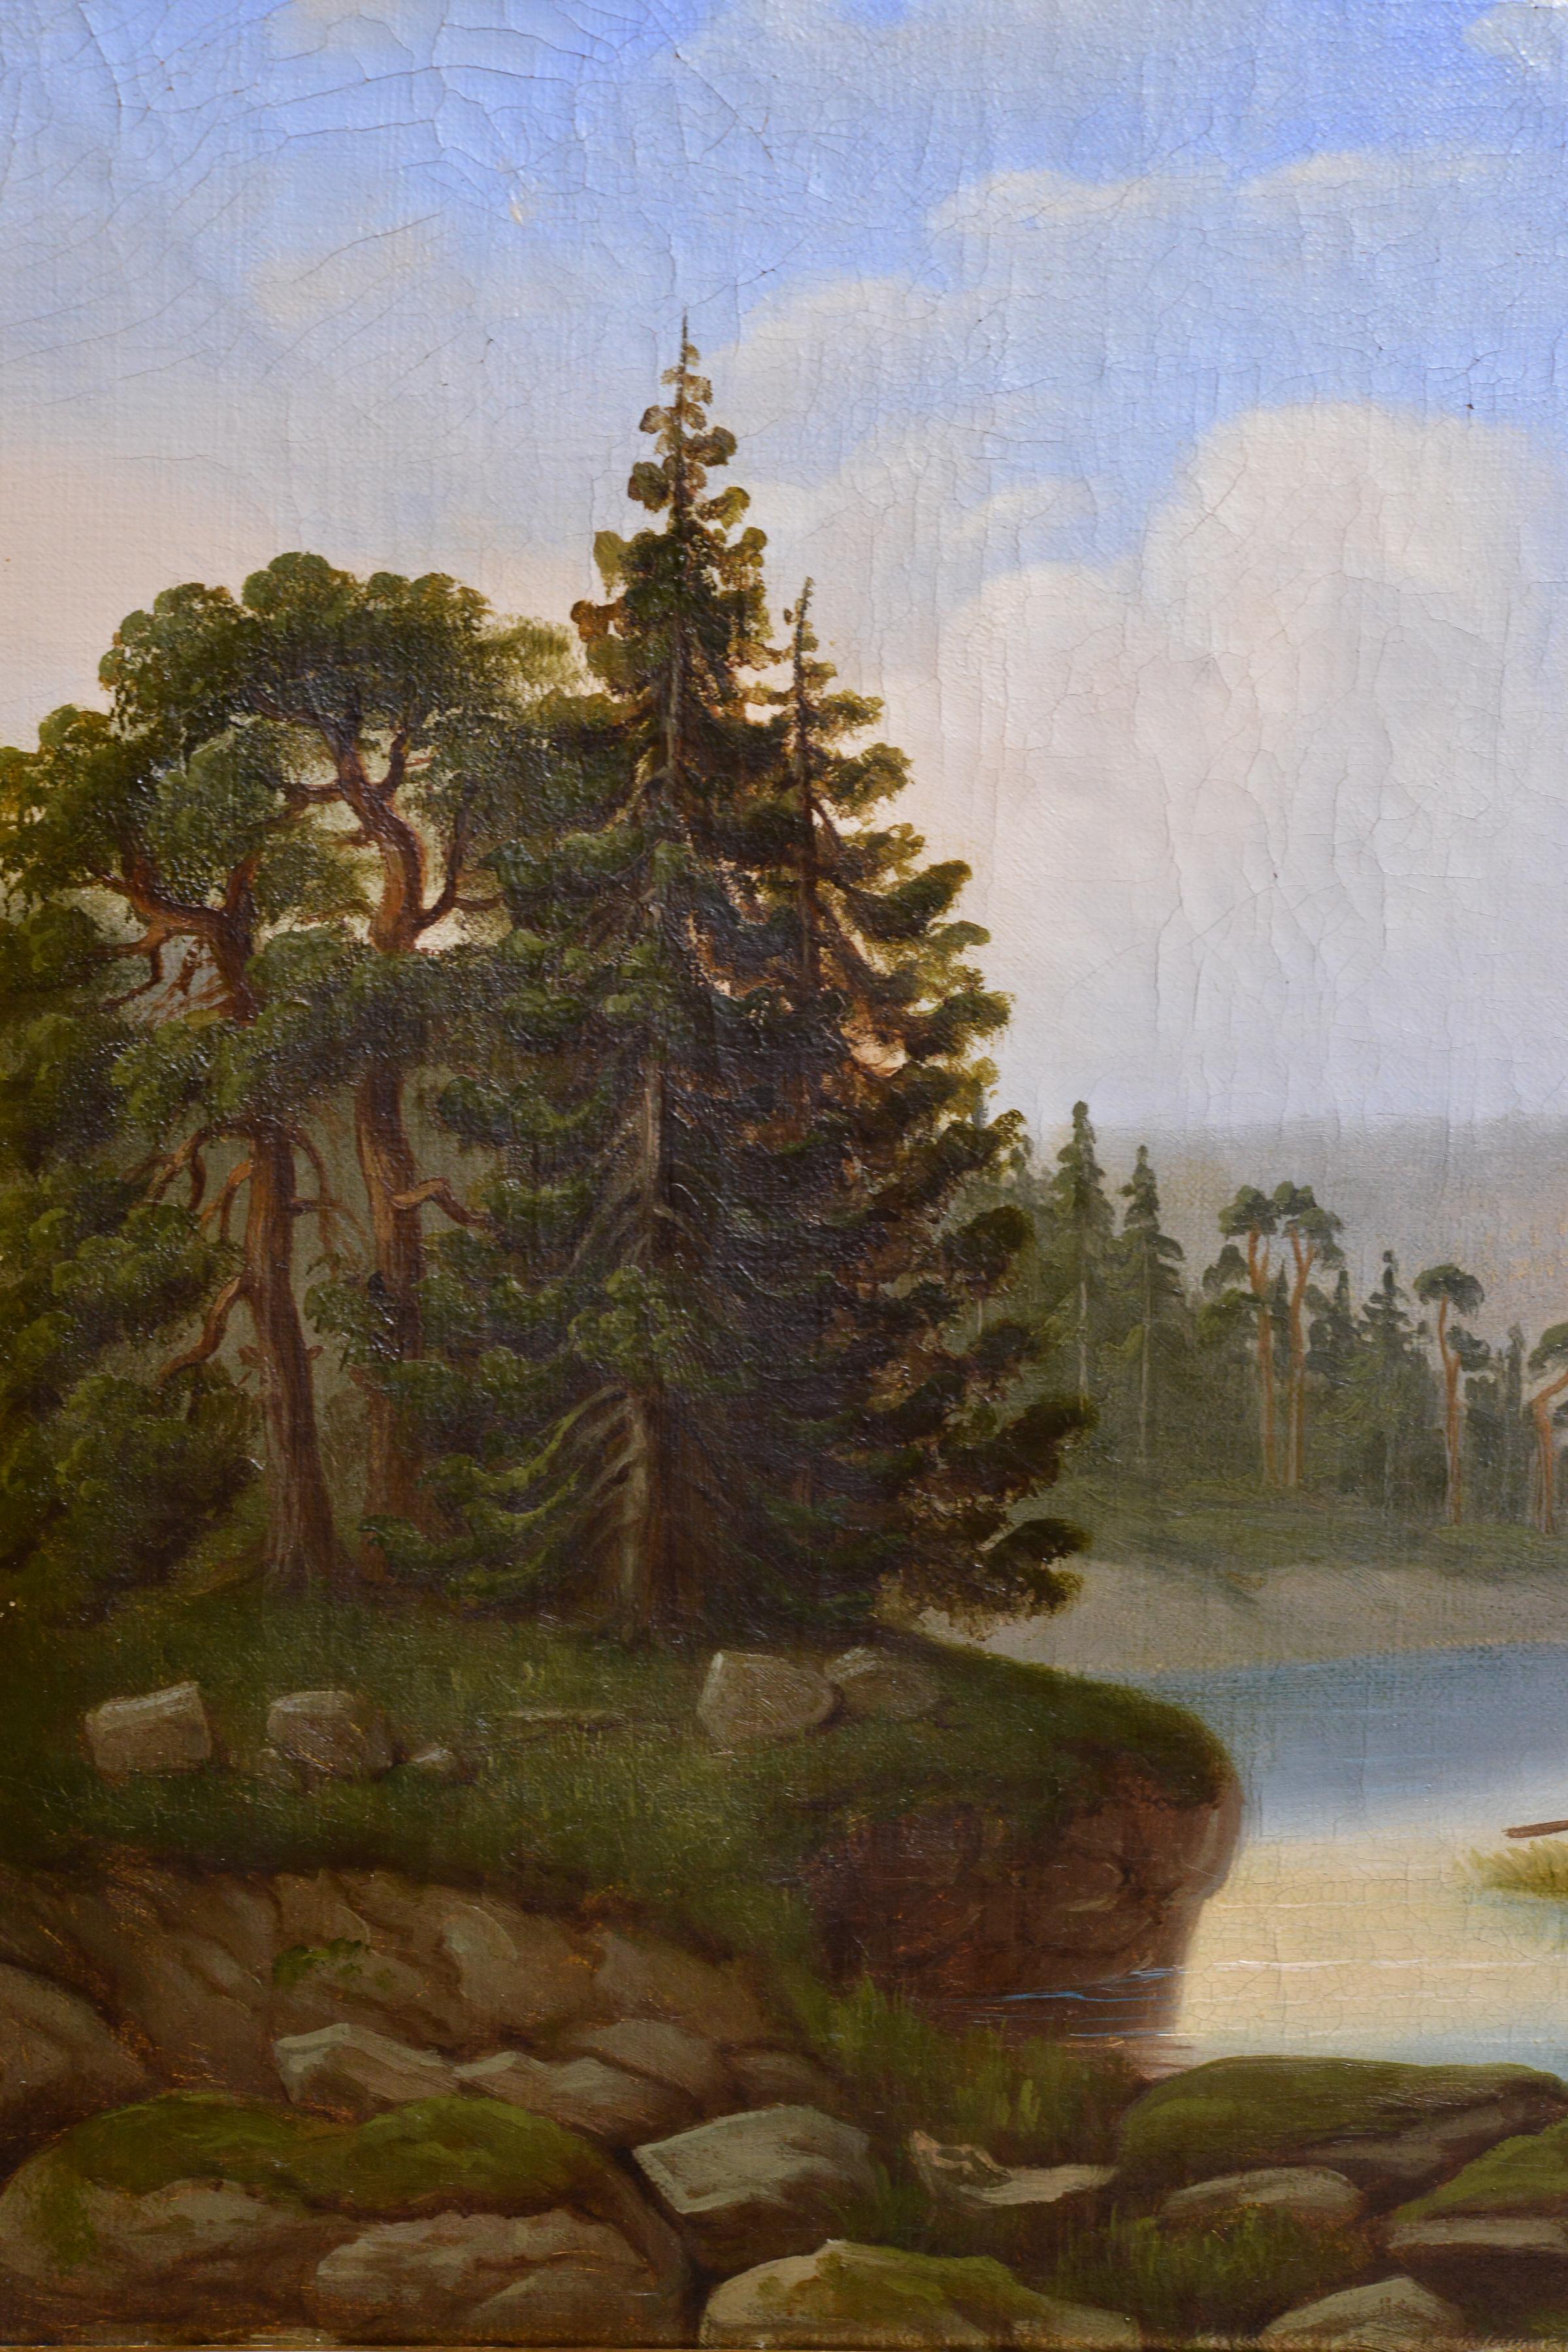 Fishermen on River Idyllic Scandinavian Landscape 19th century Oil Painting For Sale 3